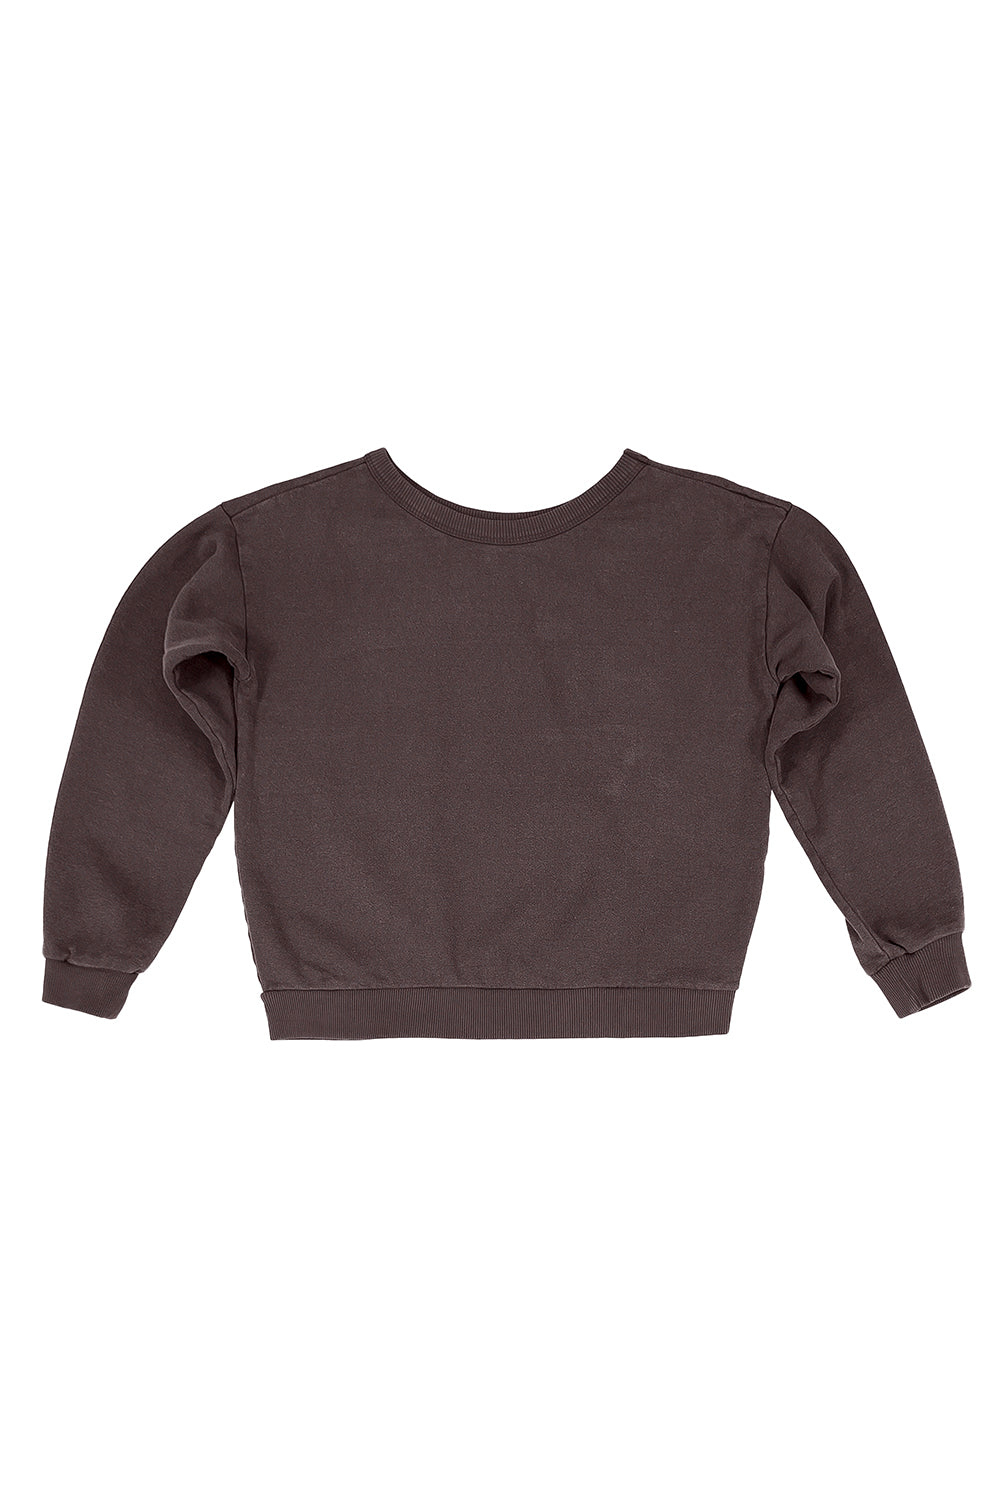 Laguna Cropped Sweatshirt | Jungmaven Hemp Clothing & Accessories / Color: Coffee Bean